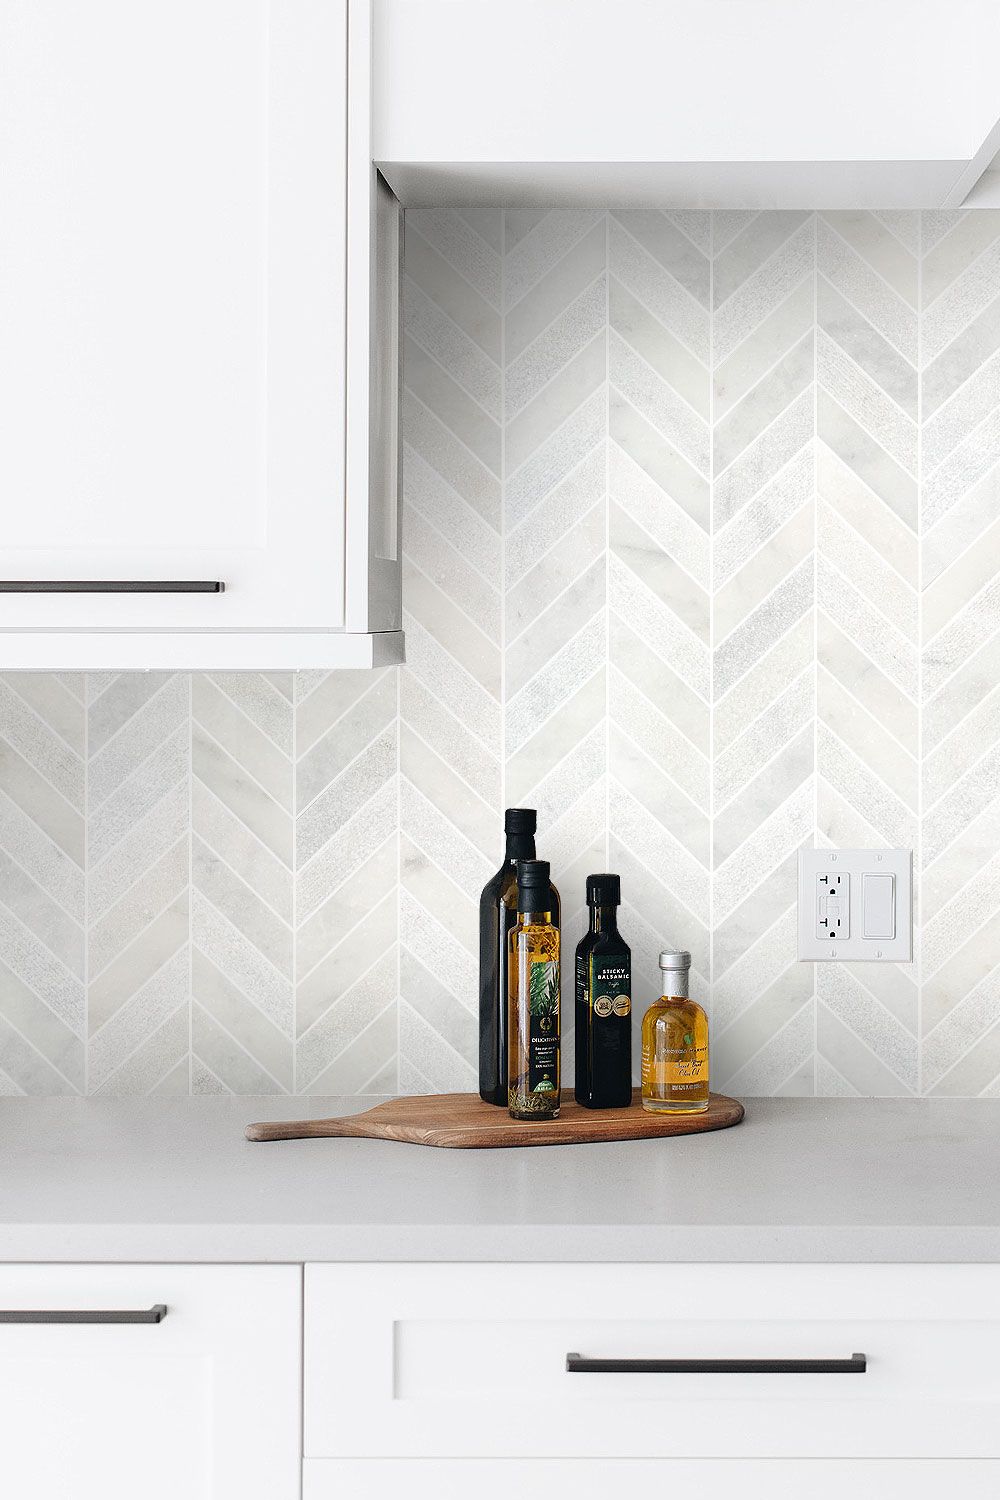 The Latest Trends in Contemporary Kitchen Backsplash Tile Designs